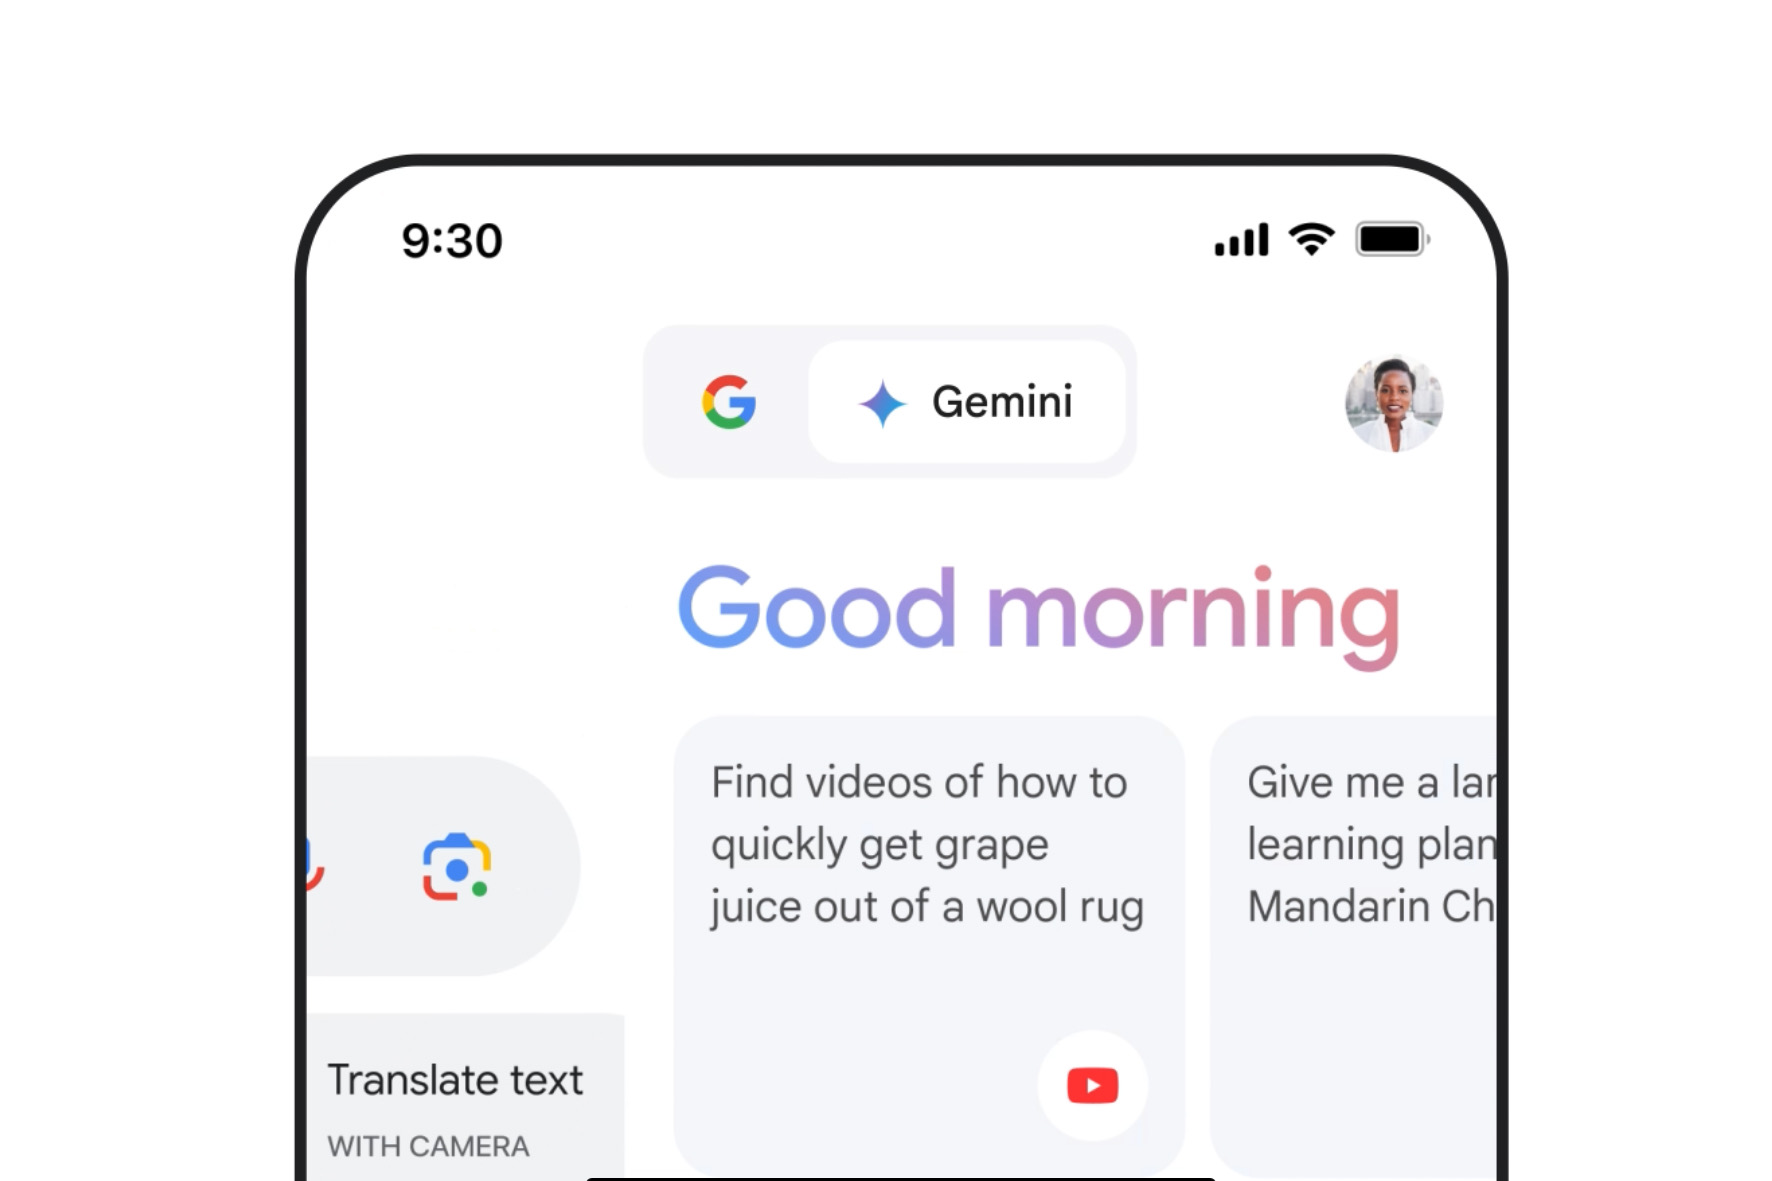 Running Google Gemini experience on iOS. 